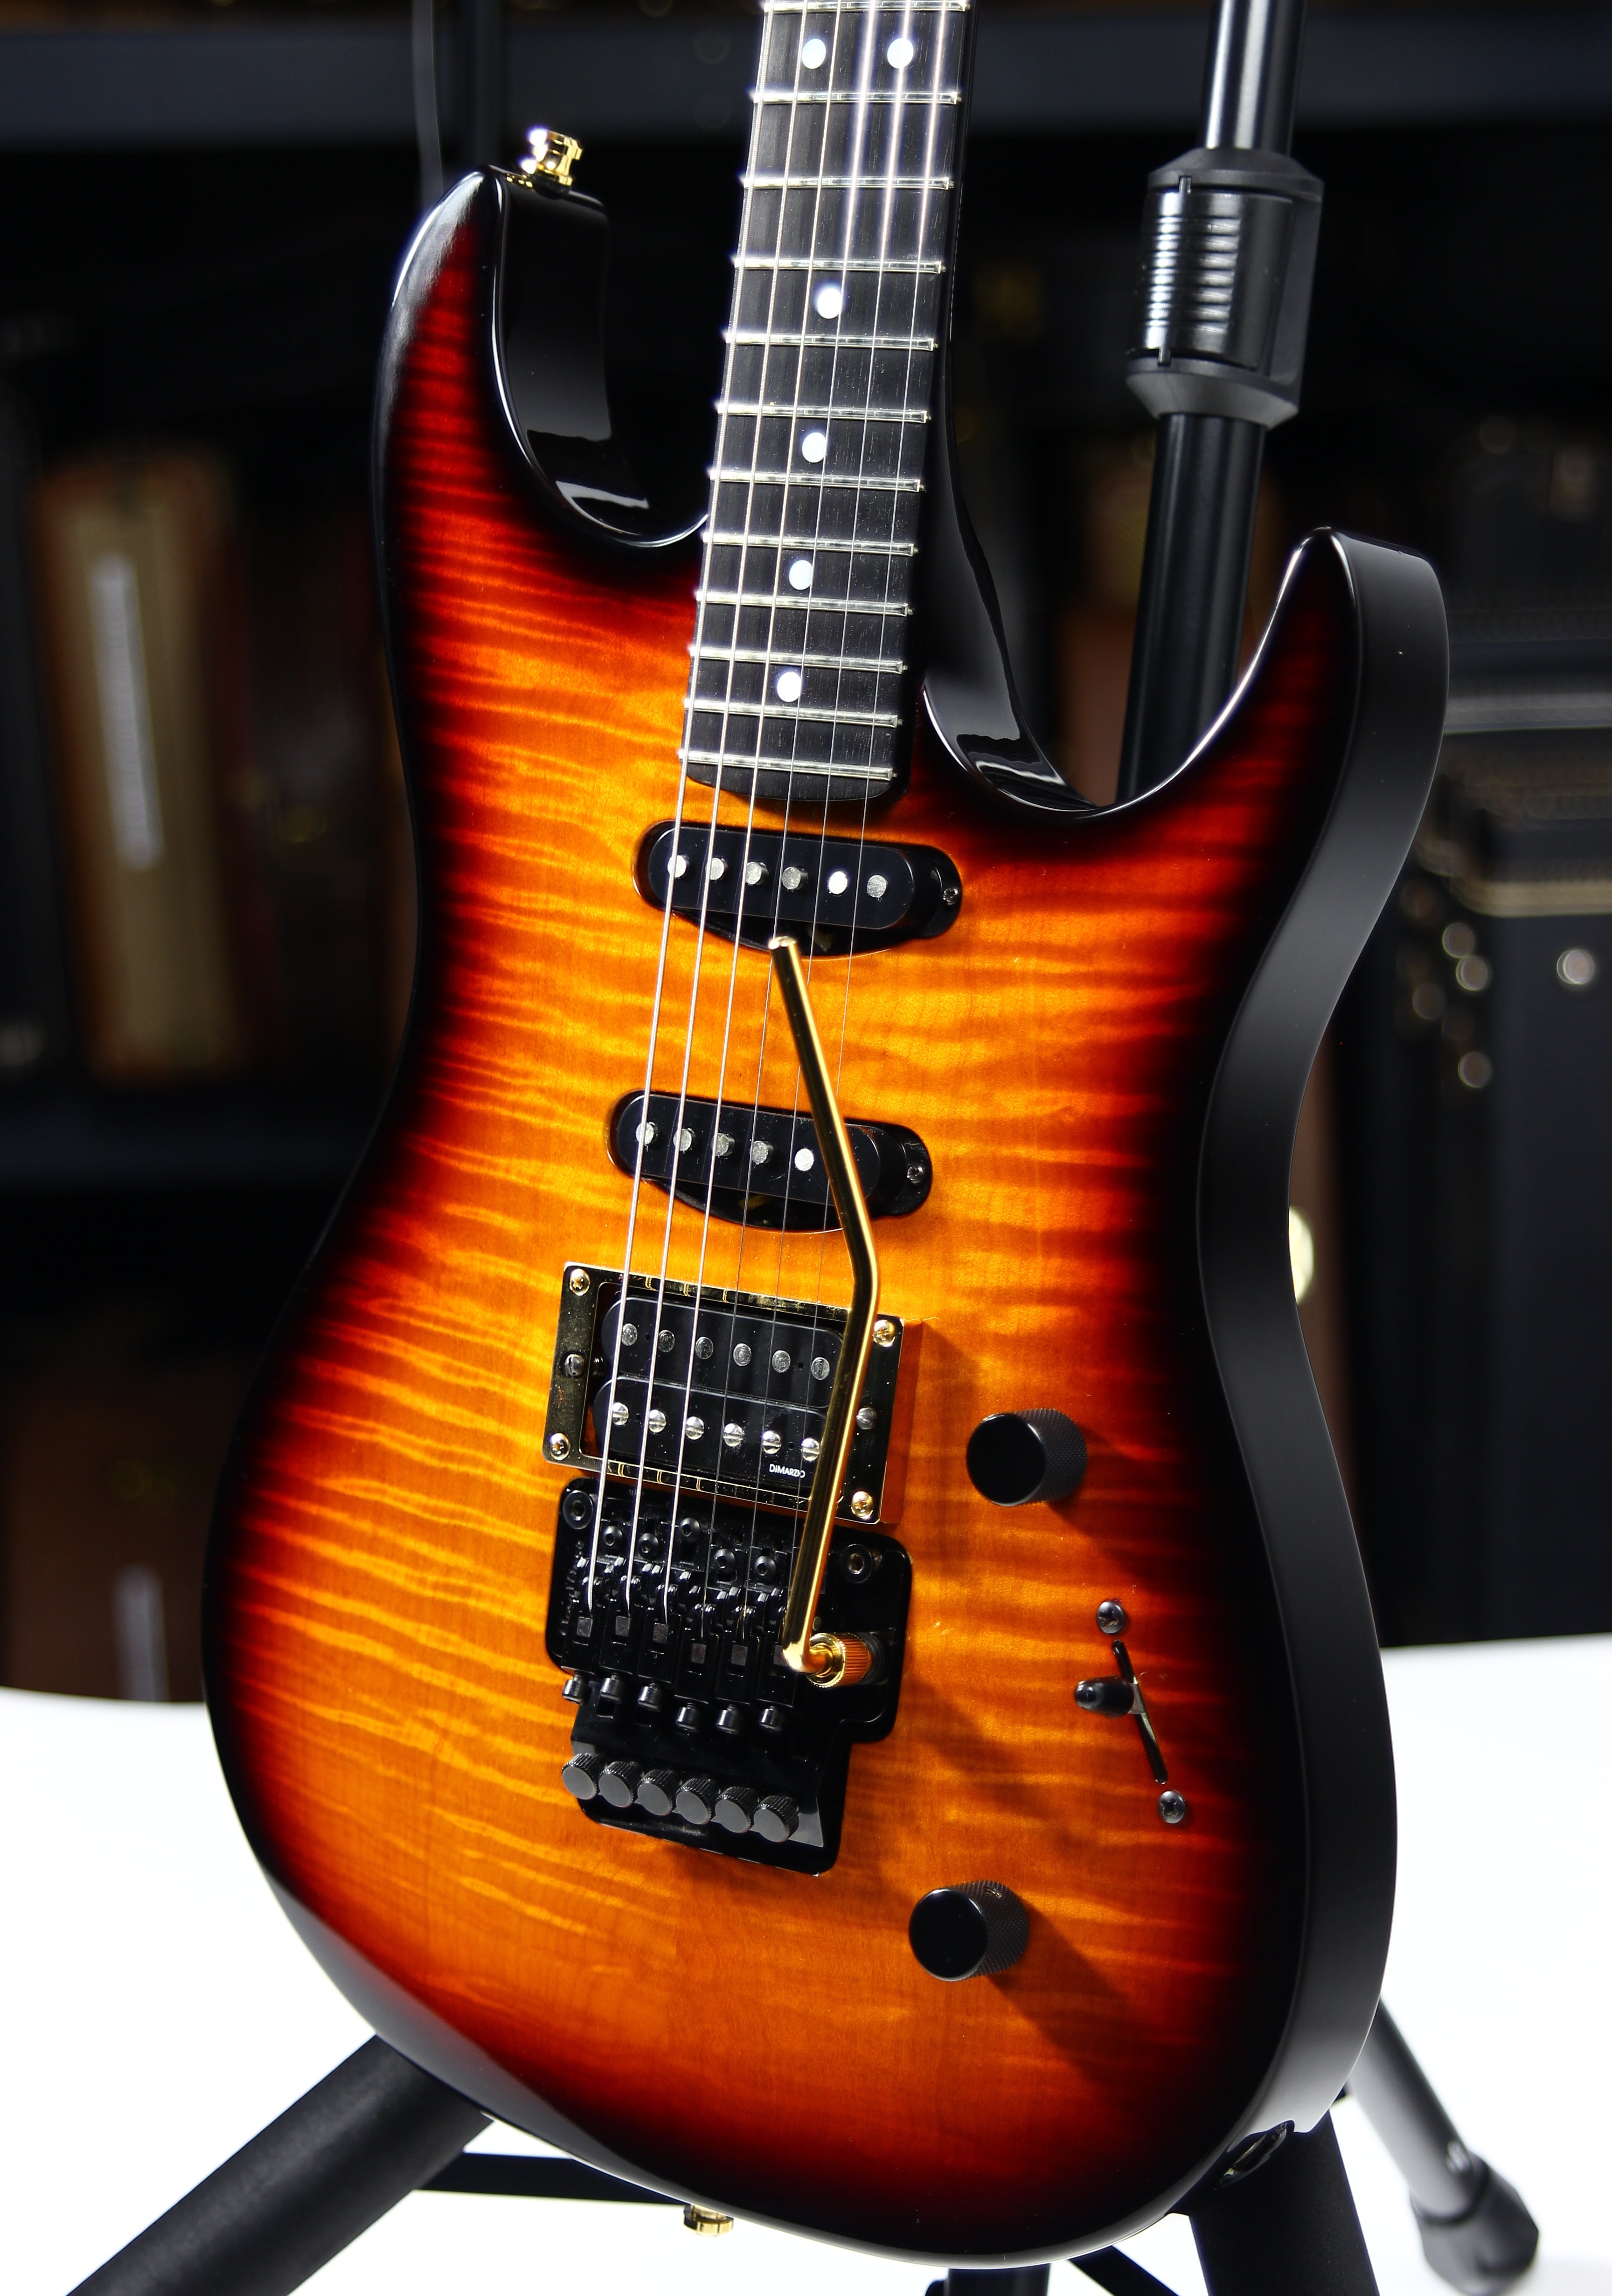 1994 Fender Custom Shop Set Neck SN Stratocaster Floyd Rose Reverse Headstock Flame Top - John Page Era! Rare Guitar!